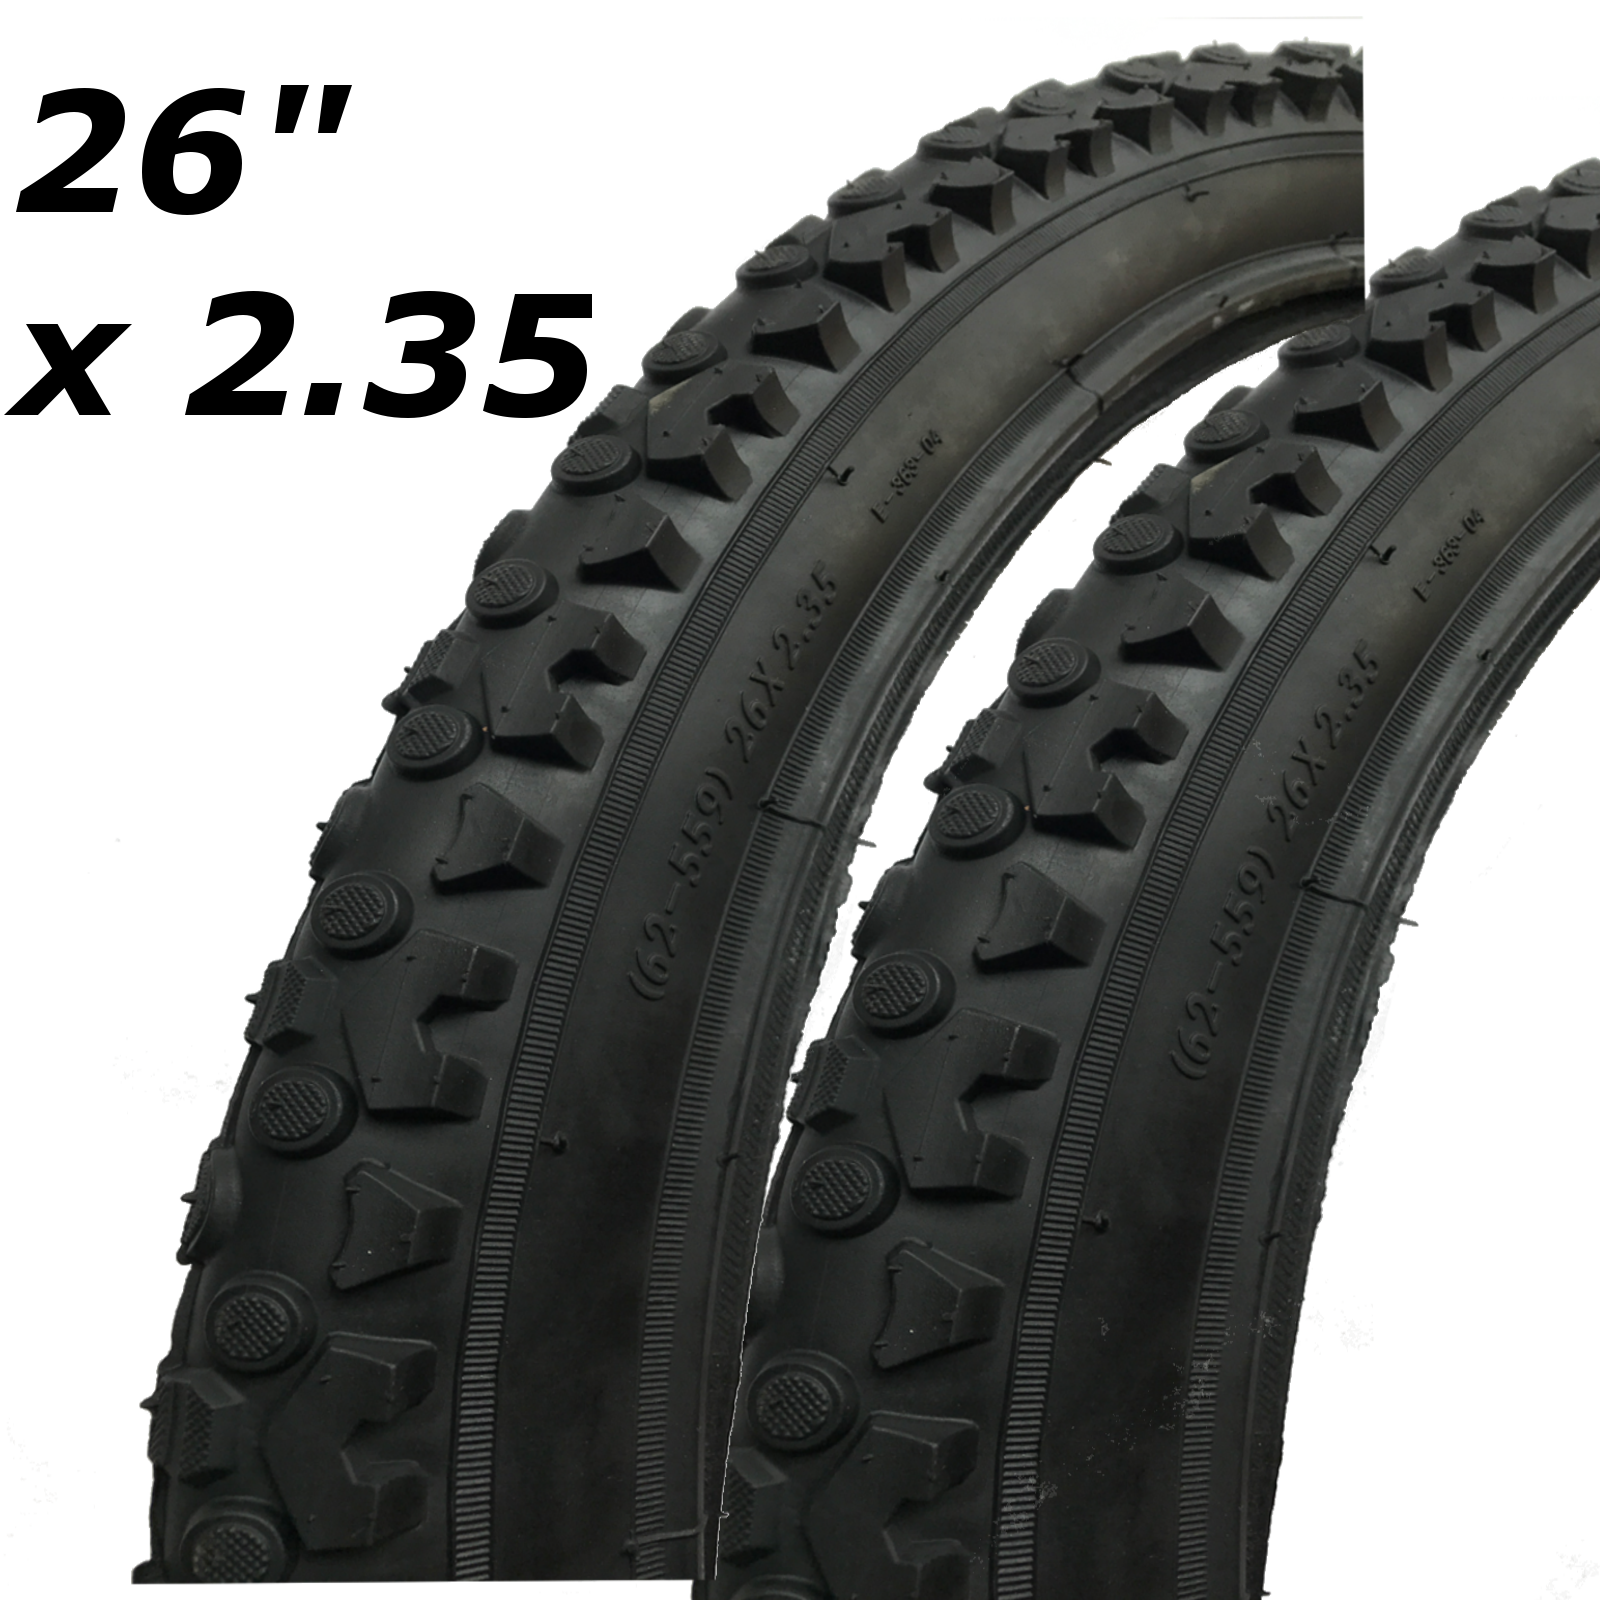 2x Bicycle Tyres Bike Tires - Mountain Bike - 26